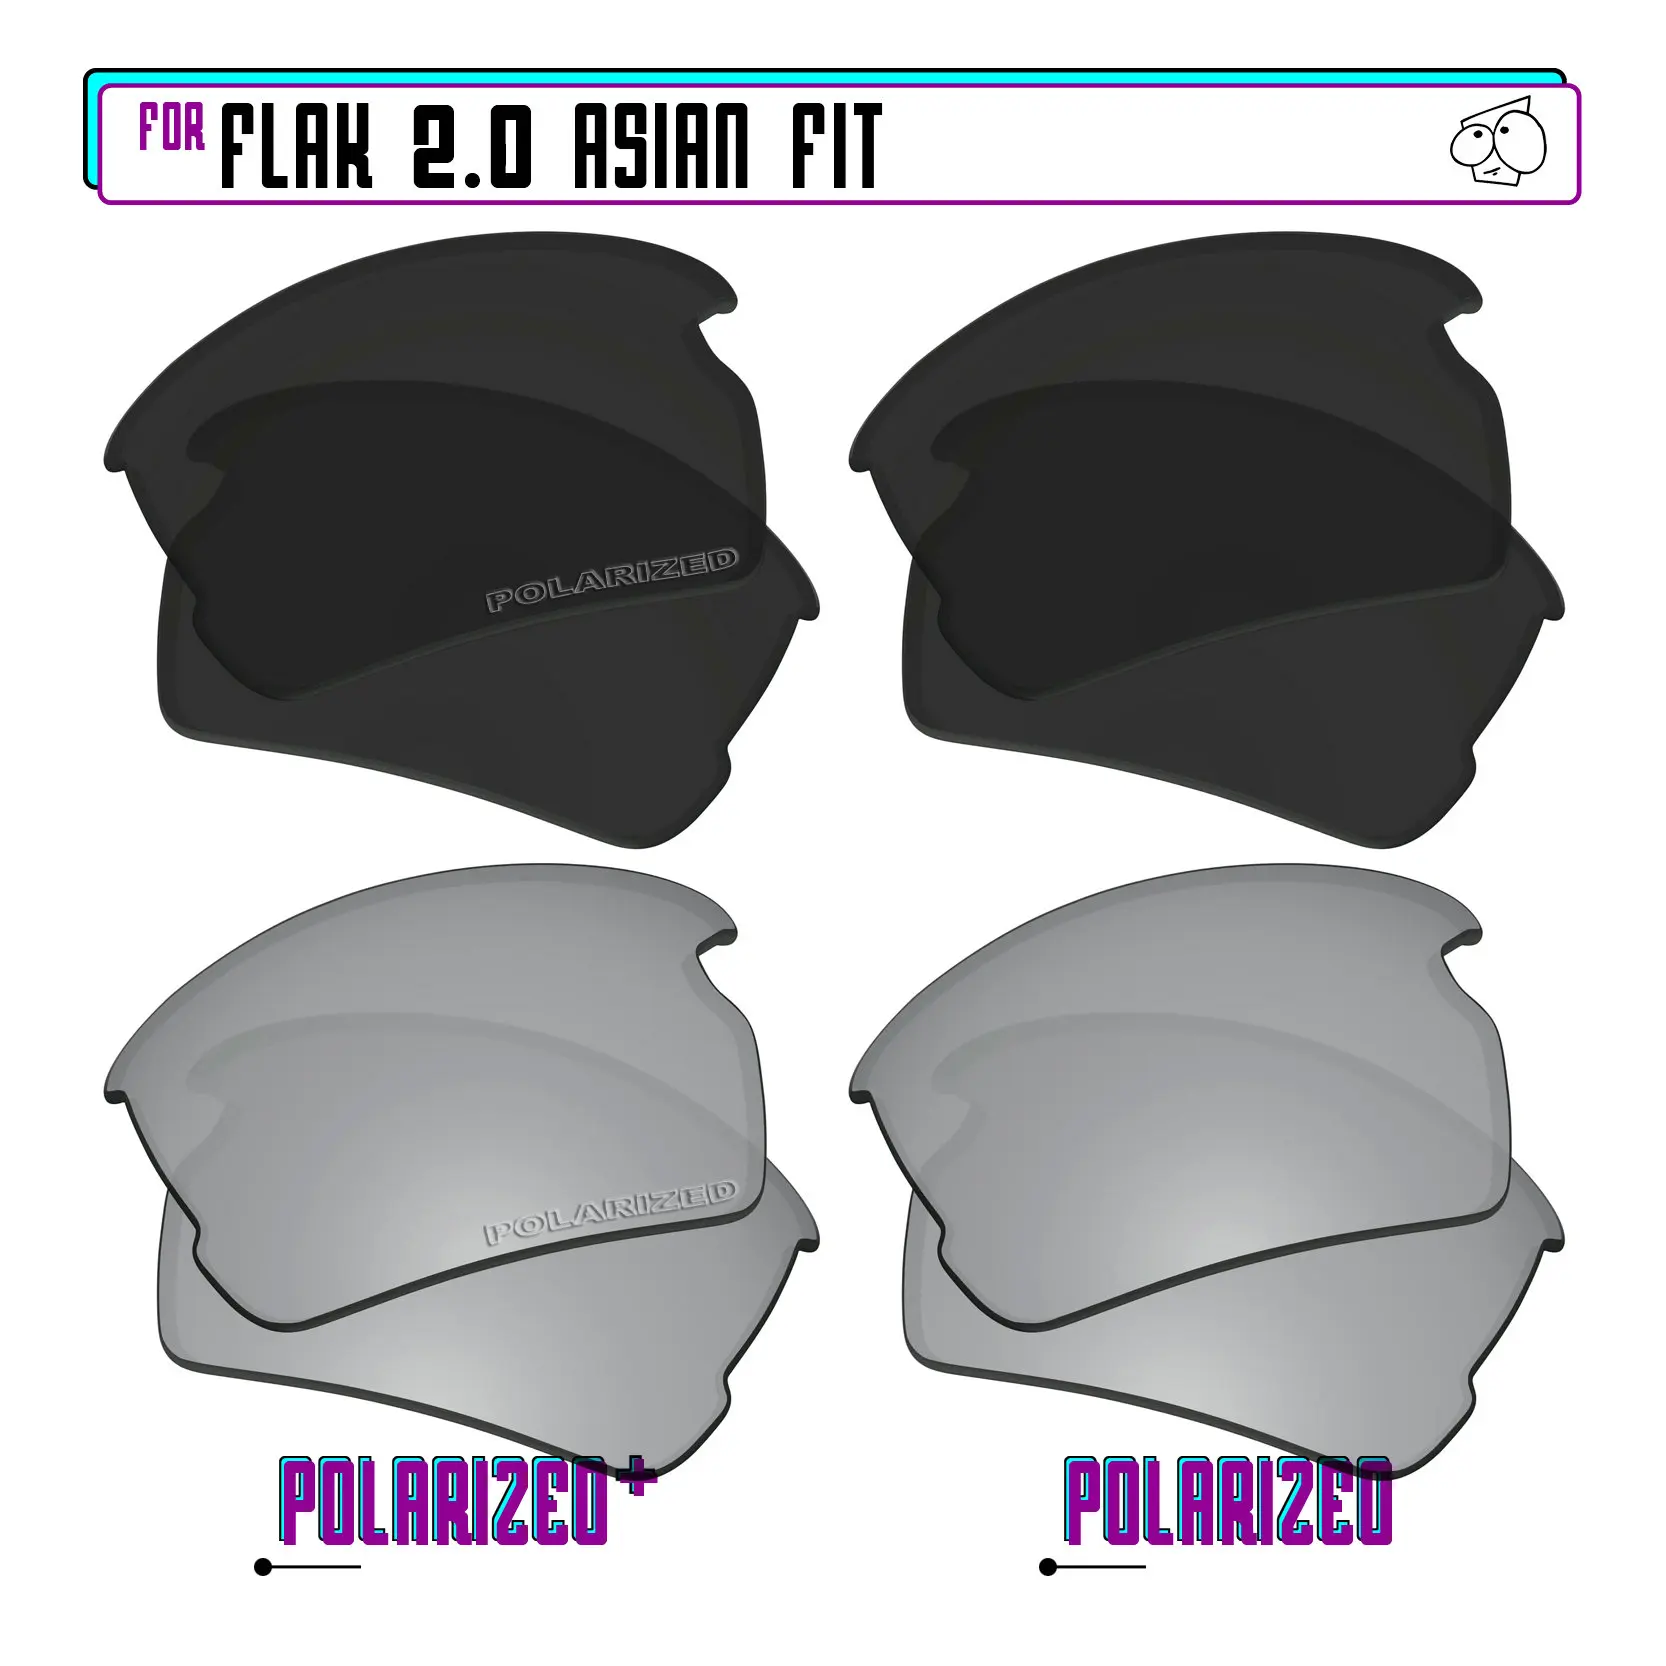 EZReplace Polarized Replacement Lenses for - Oakley Flak 2.0 Asian Fit (AF) Sunglasses - BlkSirP Plus-BlkSirP